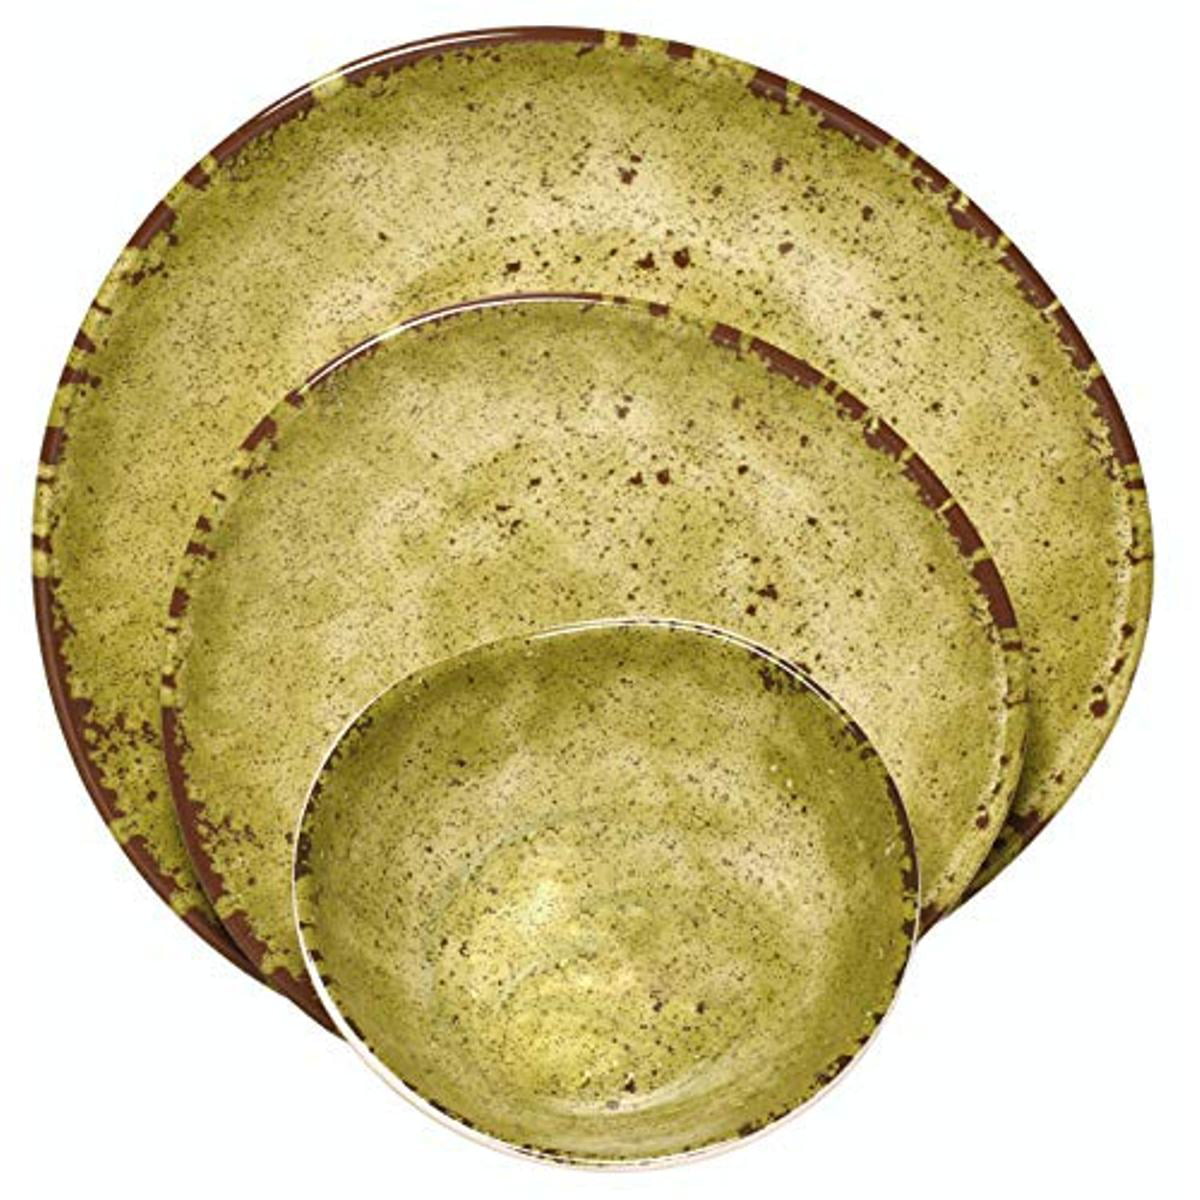 | Shatter-Proof and Chip-Resistant Melamine Plates and Bowls Color: Multicolor Solids Collection 4 Each Melange 12-Piece  Melamine Dinnerware Set Salad Plate & Soup Bowl Dinner Plate 